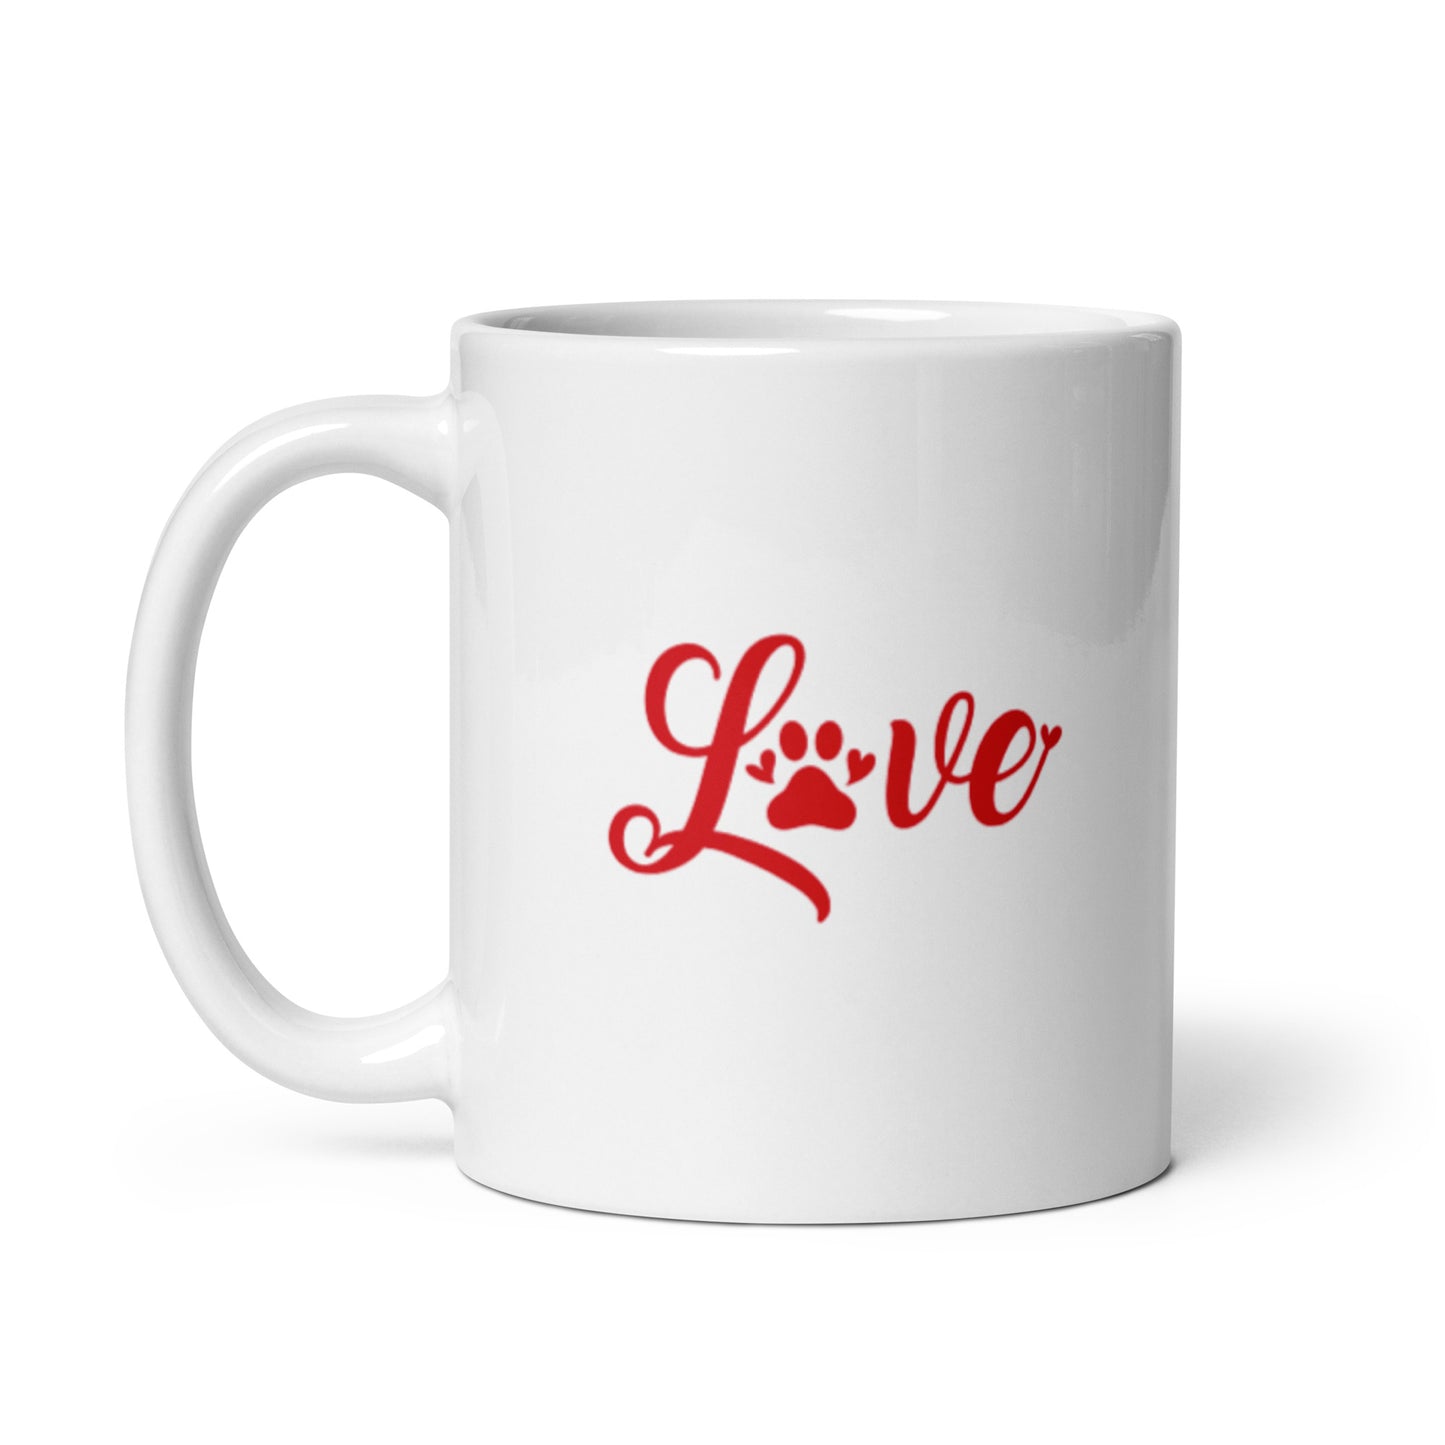 Love White glossy mug